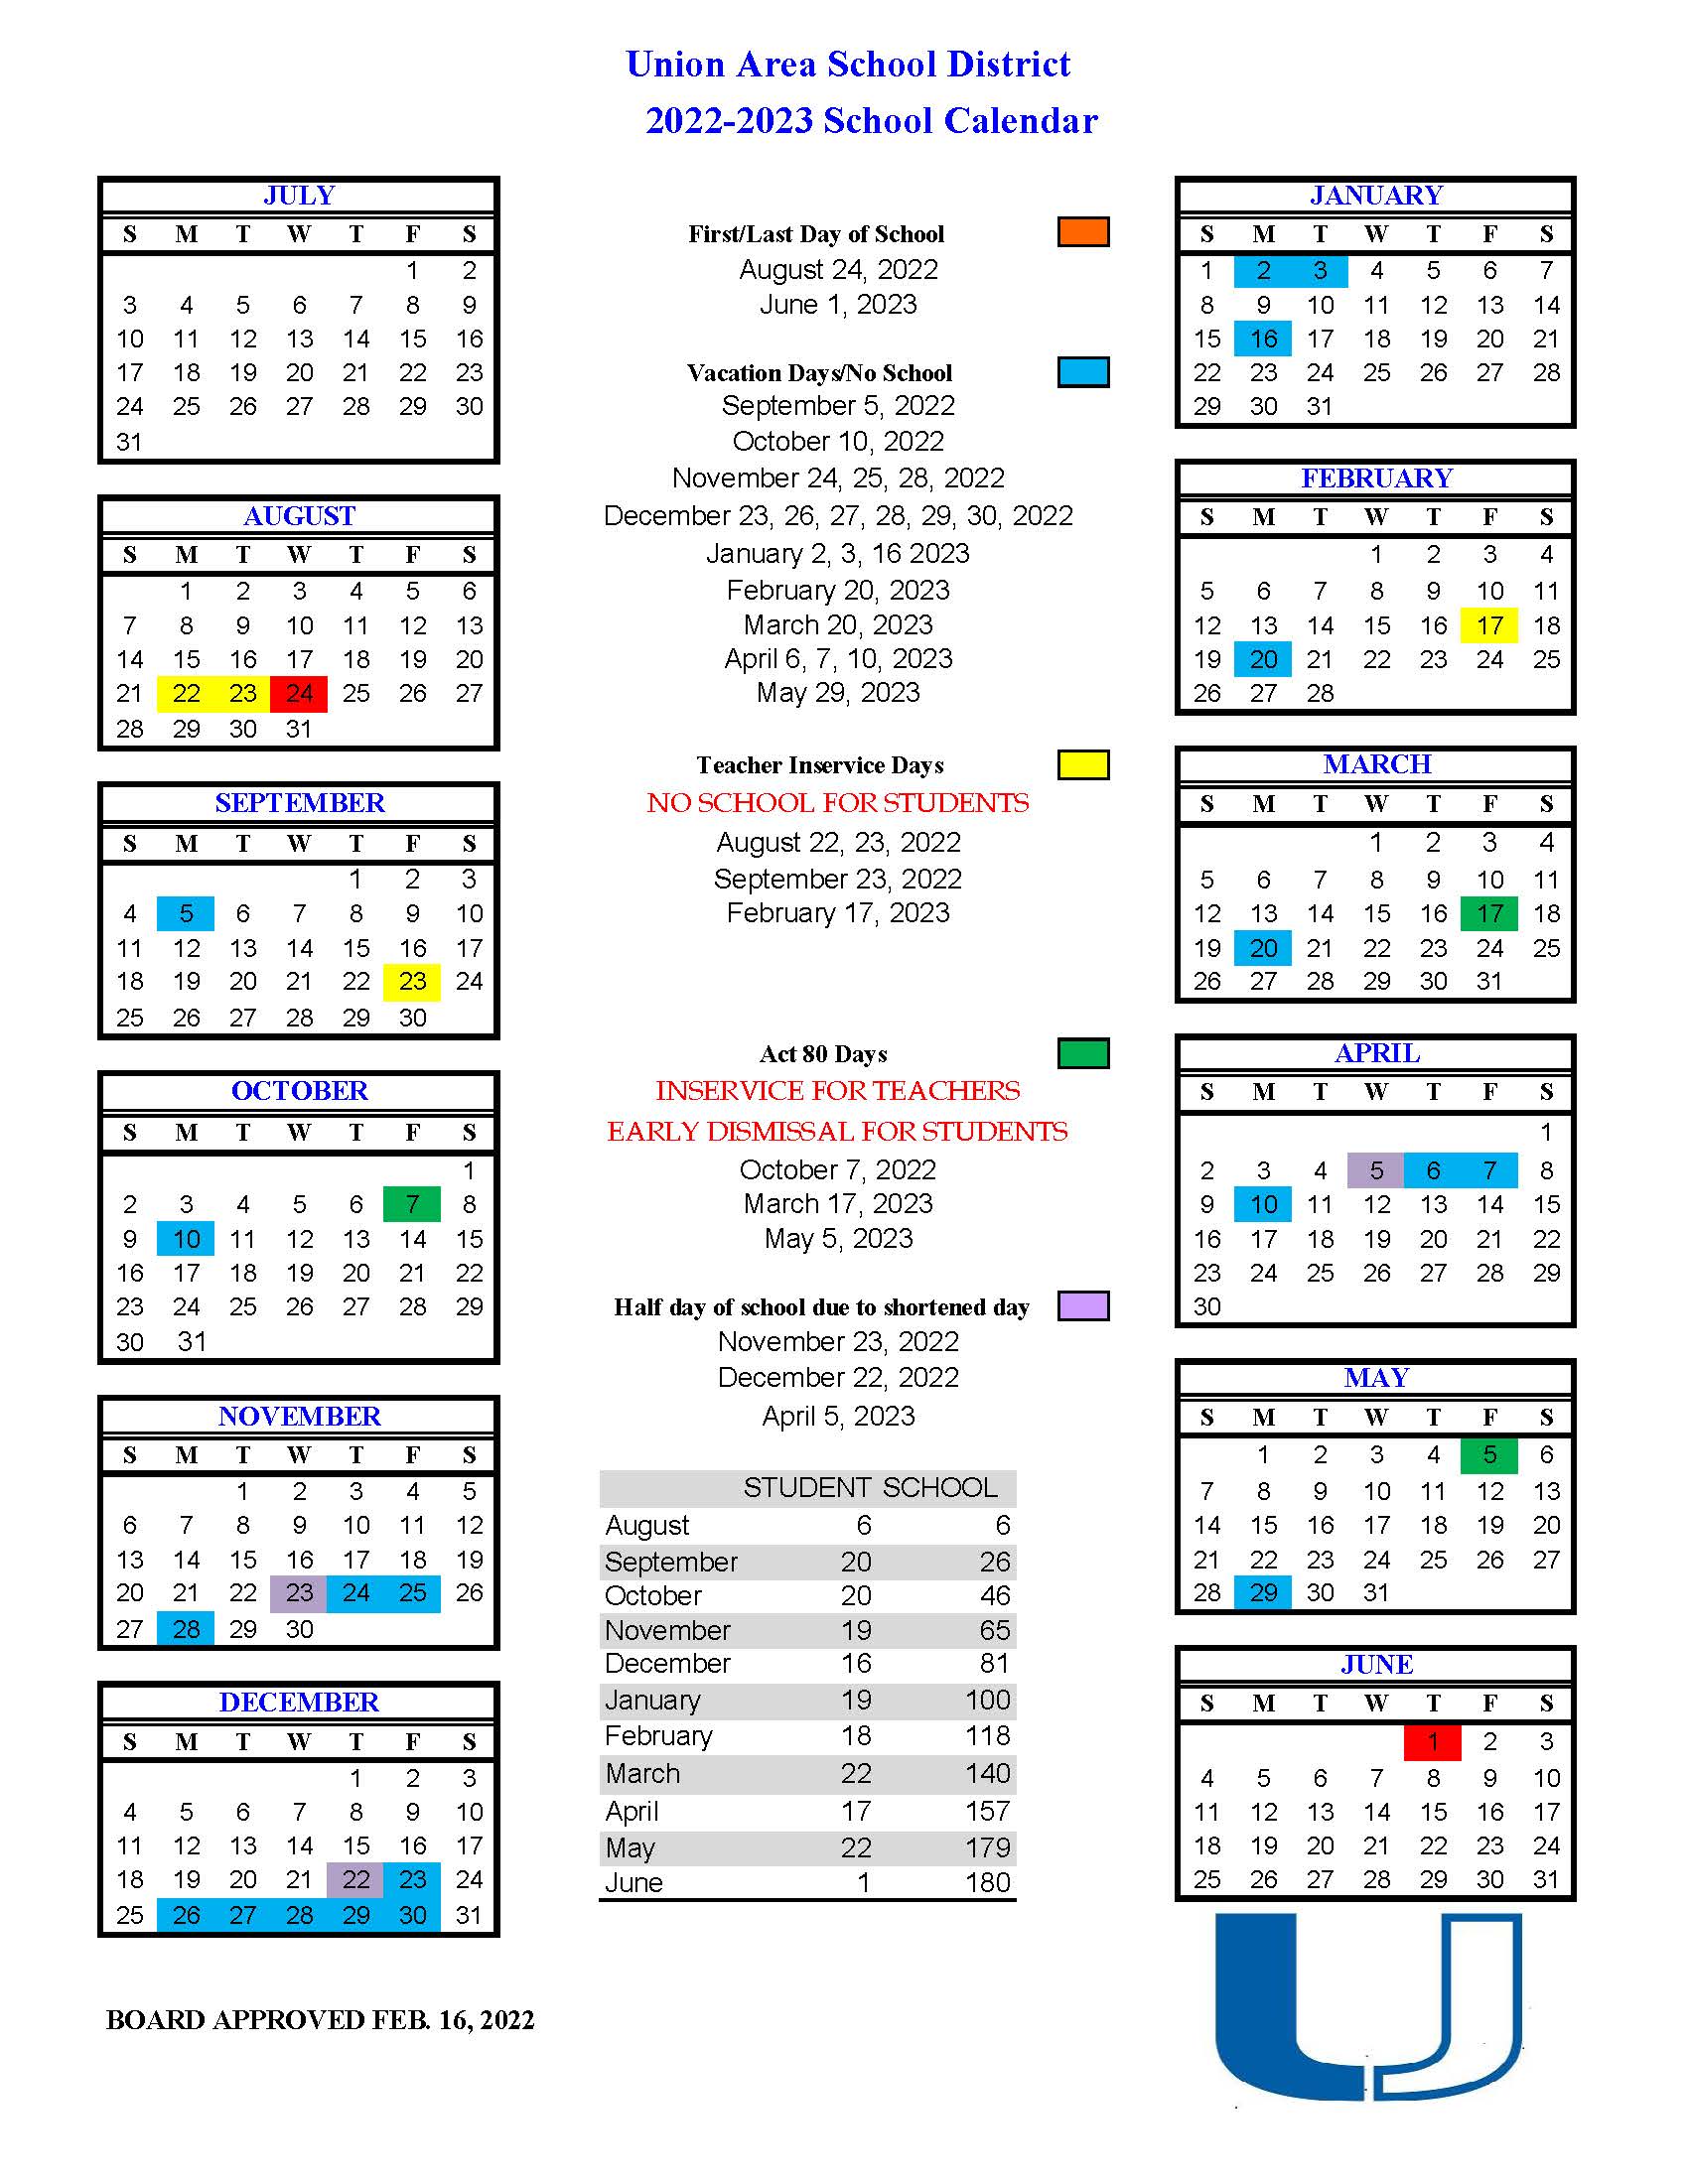 Union Area School District Calendar 2024 2025 MyCOLLEGEPOINTS